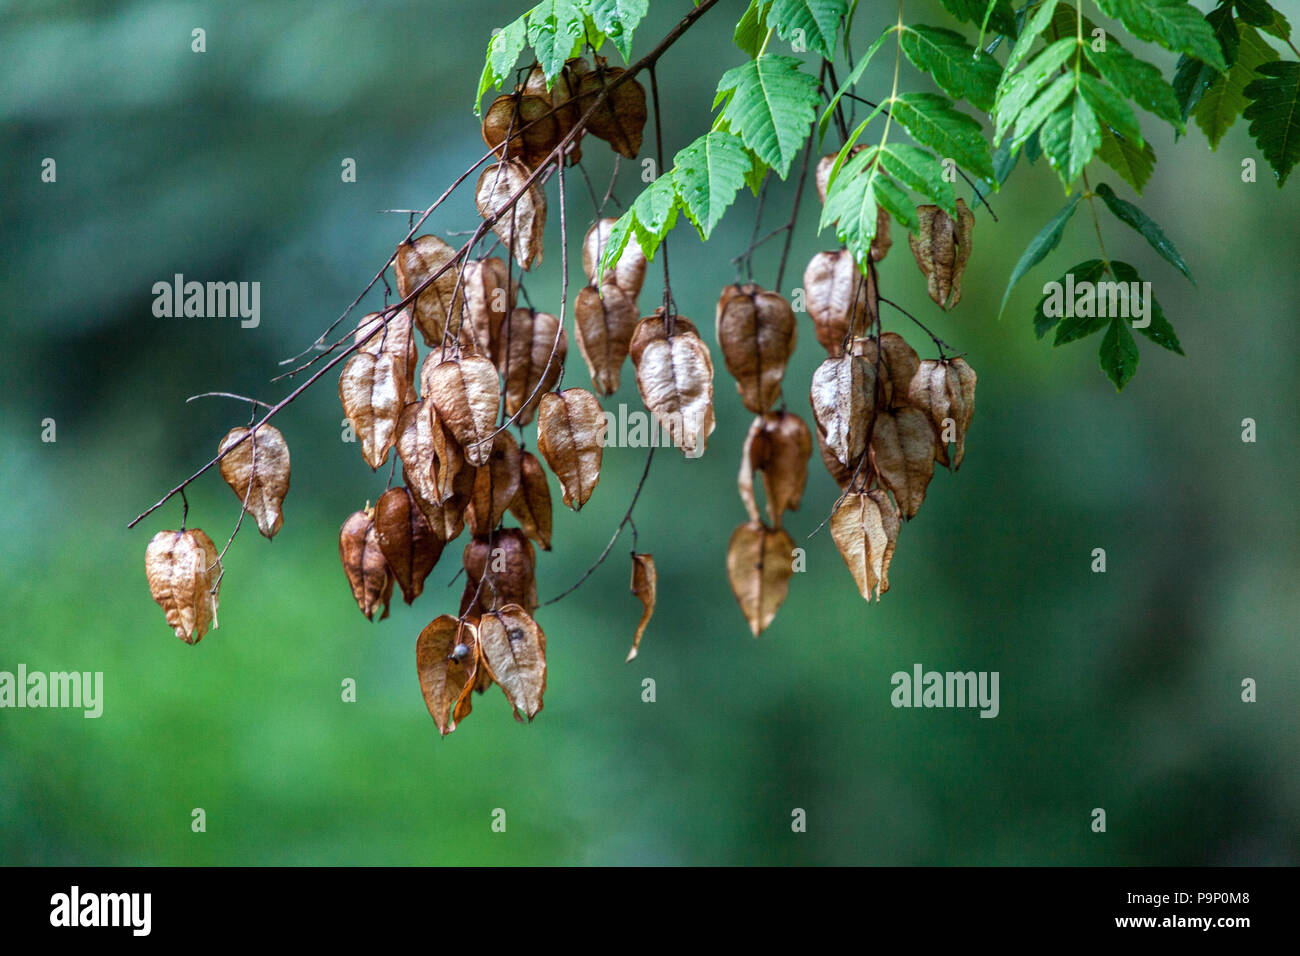 Koelreuteria paniculata 'Apiculata', Goldregenbaum, Früchte, die an Samenkapseln hängen Stockfoto